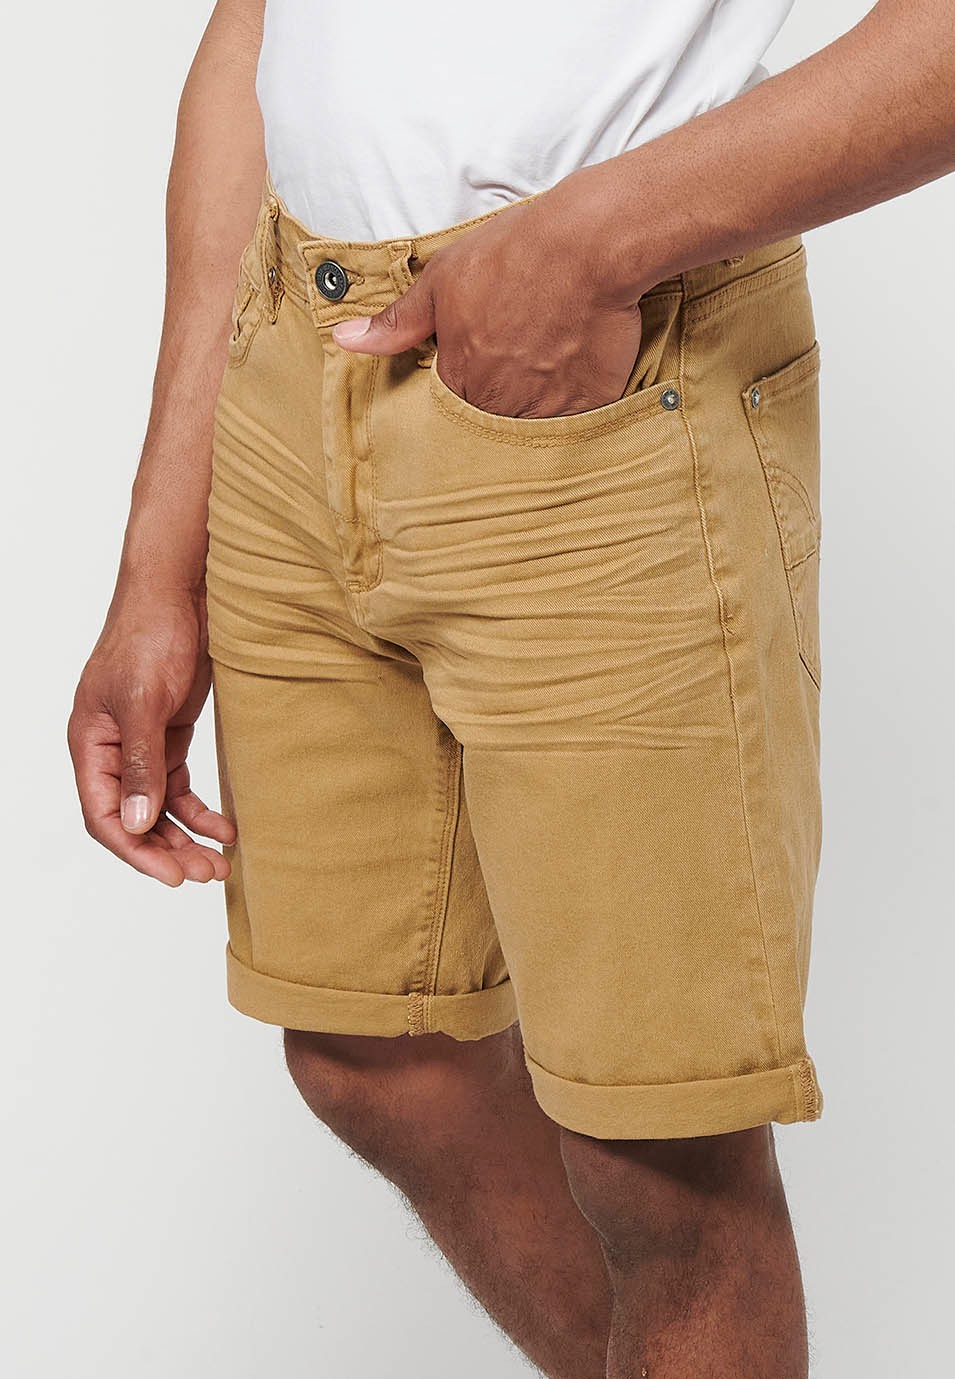 Shorts, five pockets, tan color for men